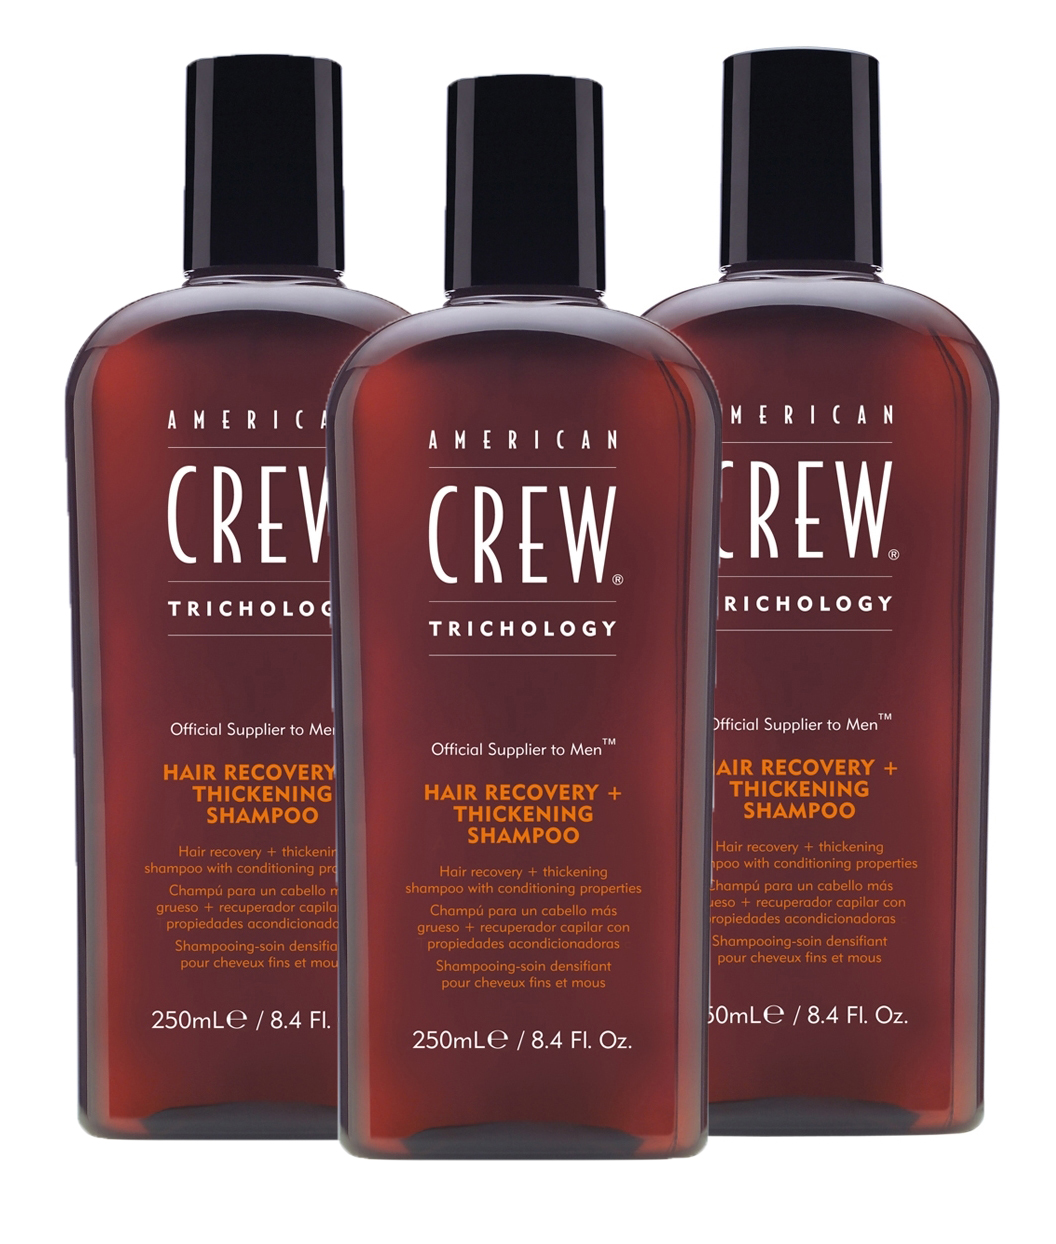 American Crew Daily Cleansing Shampoo. American Crew Detox Shampoo 250 мл. American Crew Daily Silver Shampoo. Американ Крю Дэйли Клинсинг шампунь 250 литр.